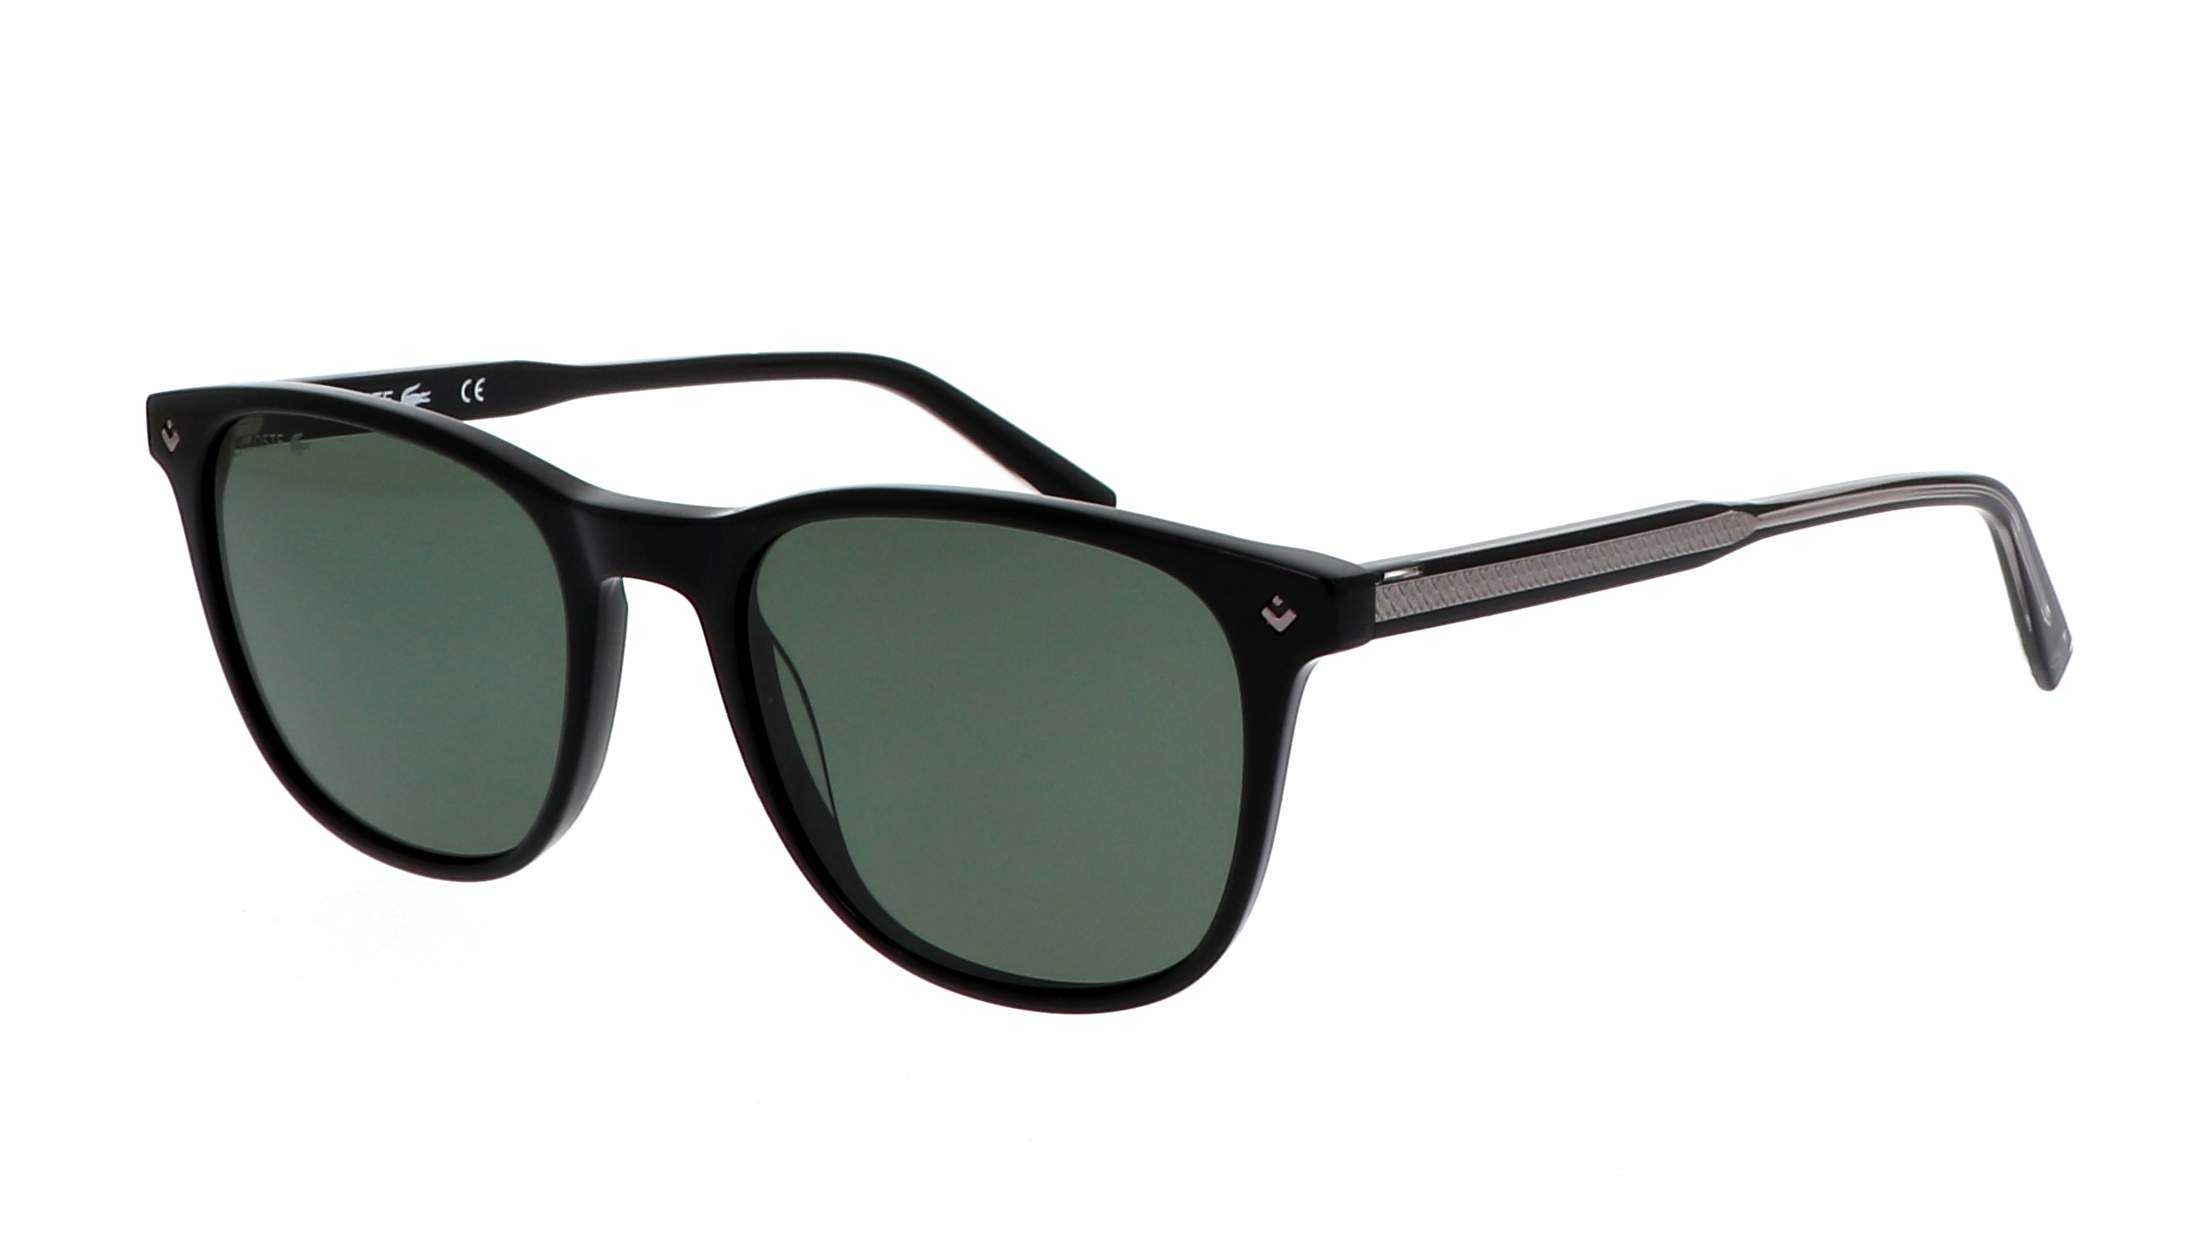 lacoste polarized sunglasses